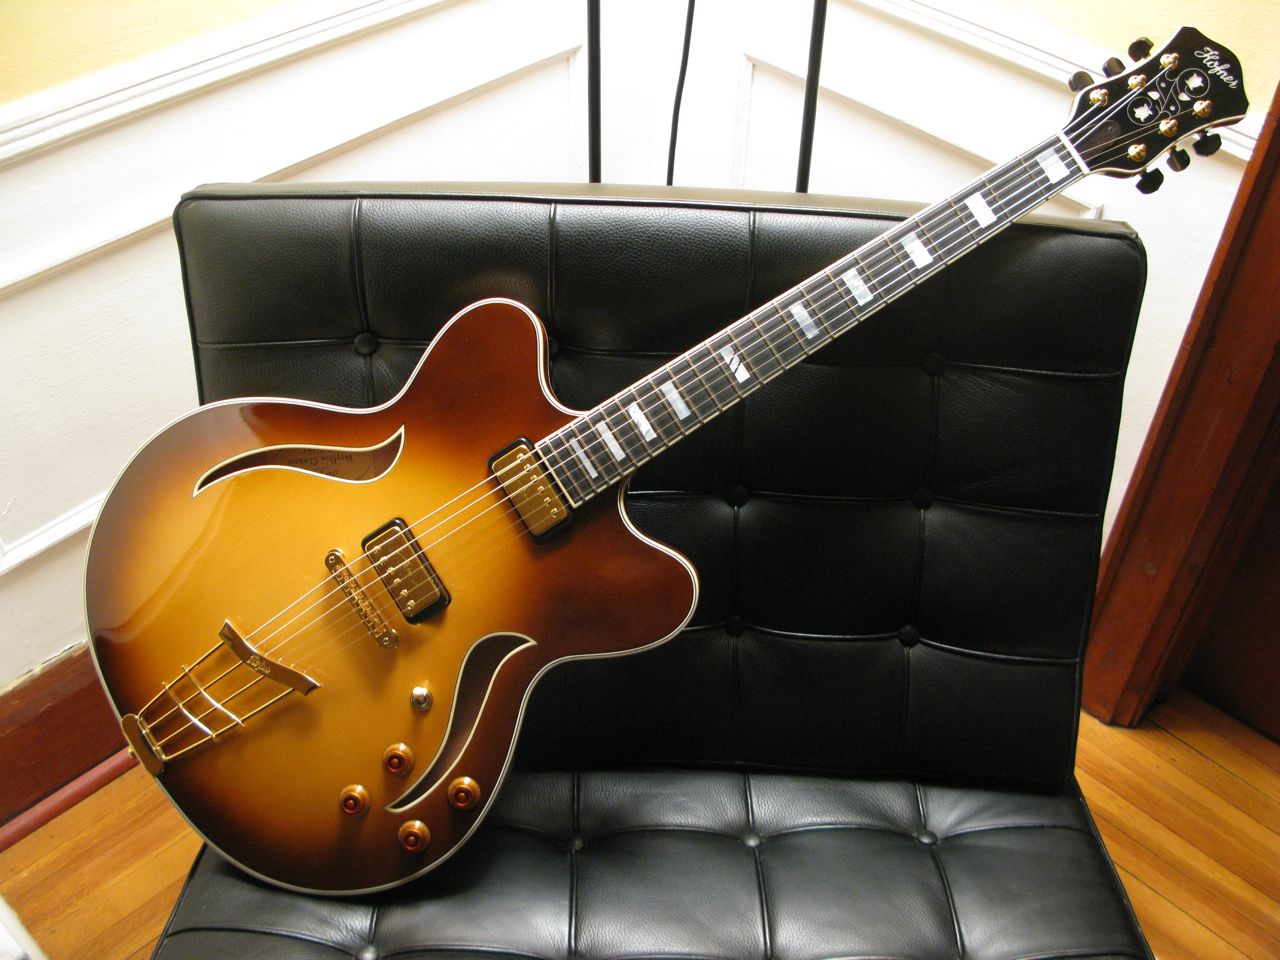 ES-335 style guitar love thread, no telecasters allowed-hof-verythin-classic-l10141-sbc-2010-jpg